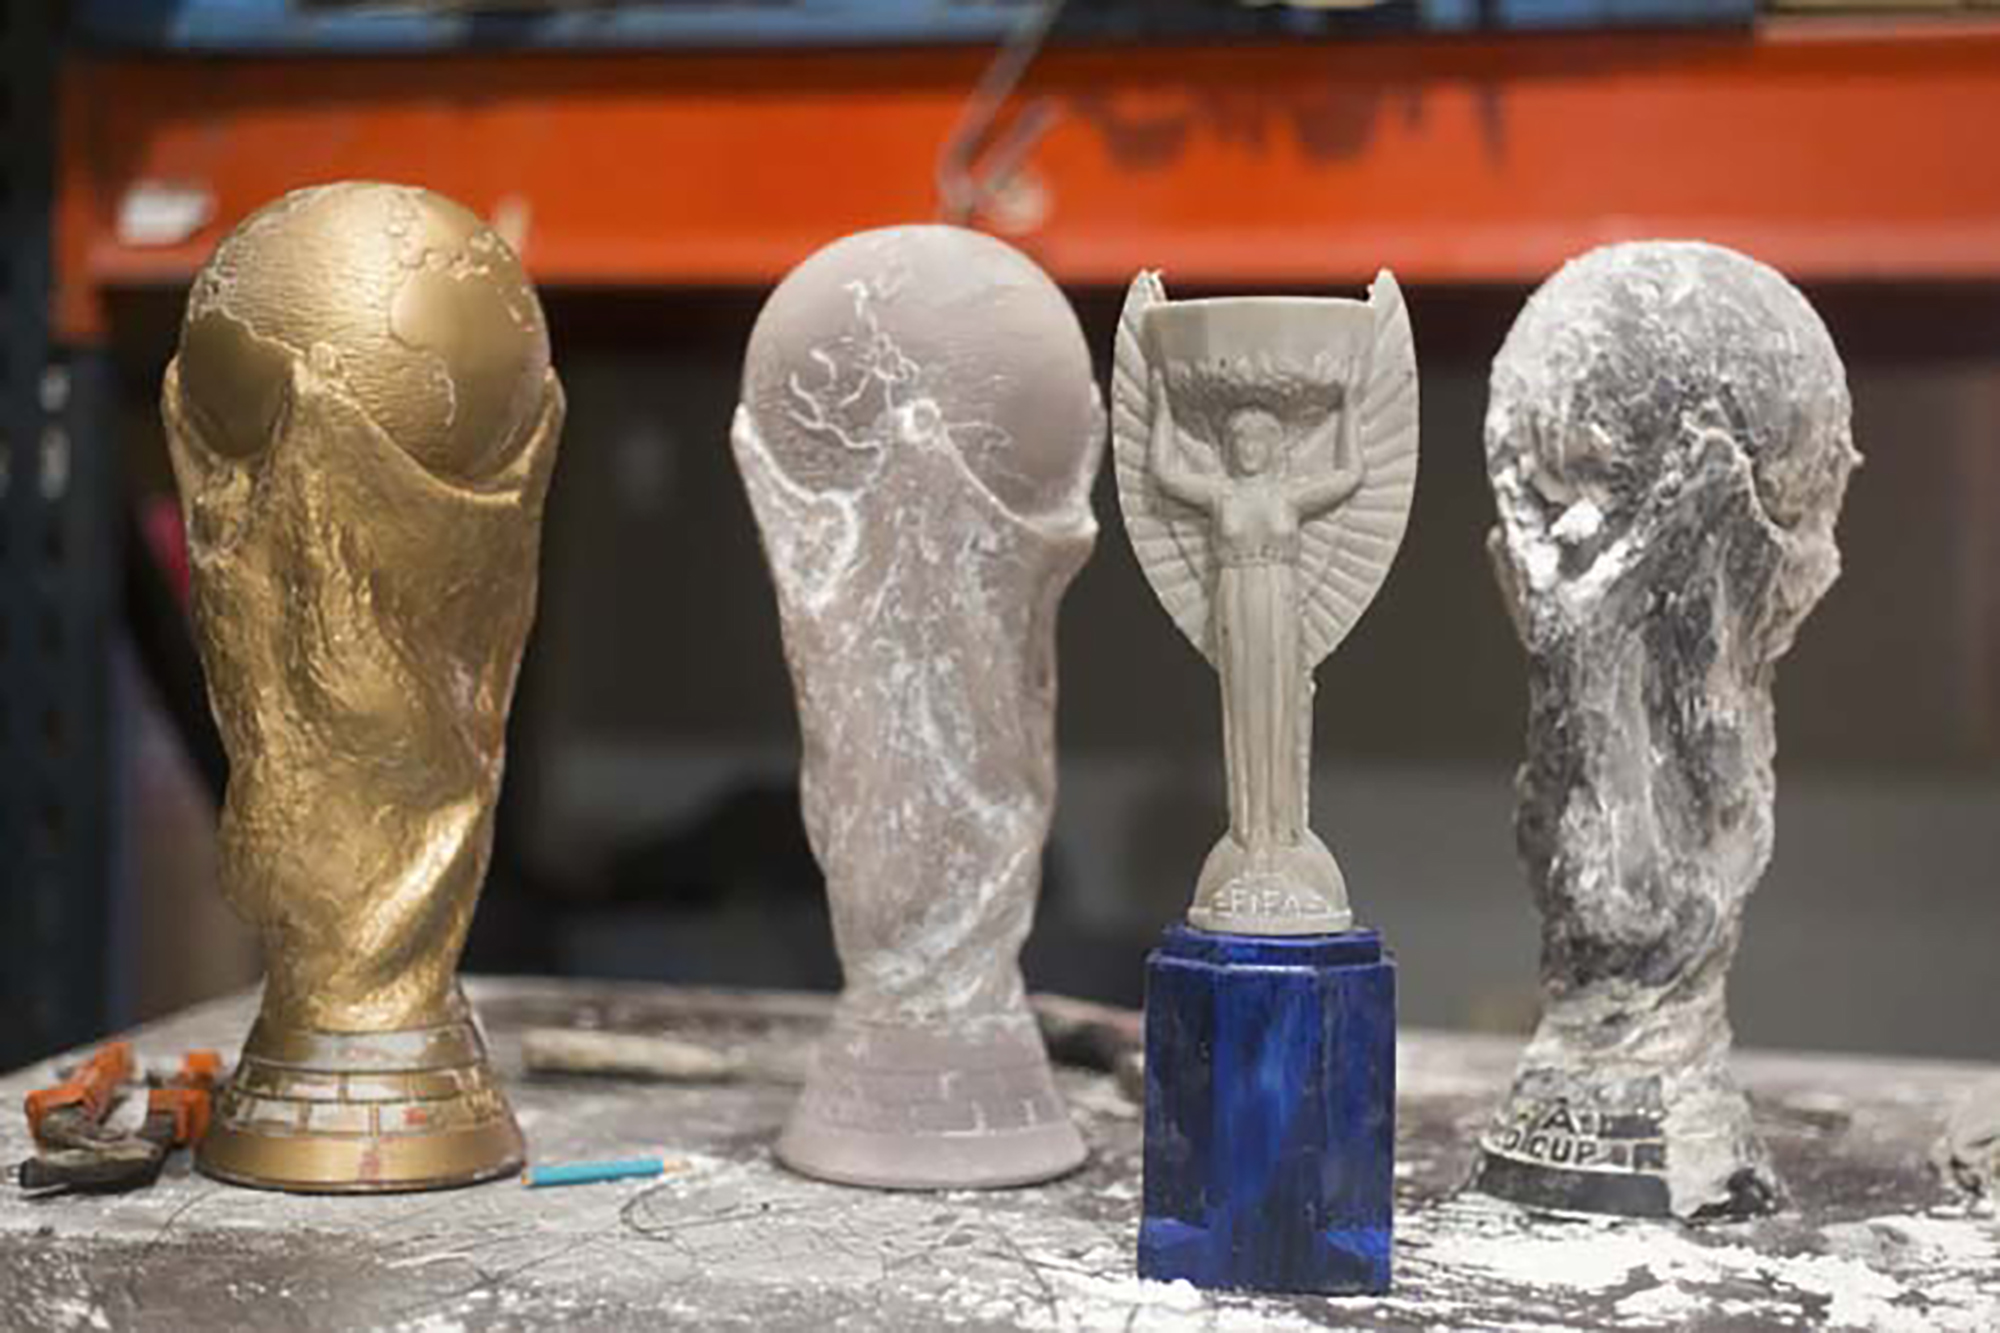  2022 World Cup Trophy Replica, World Cup Replica